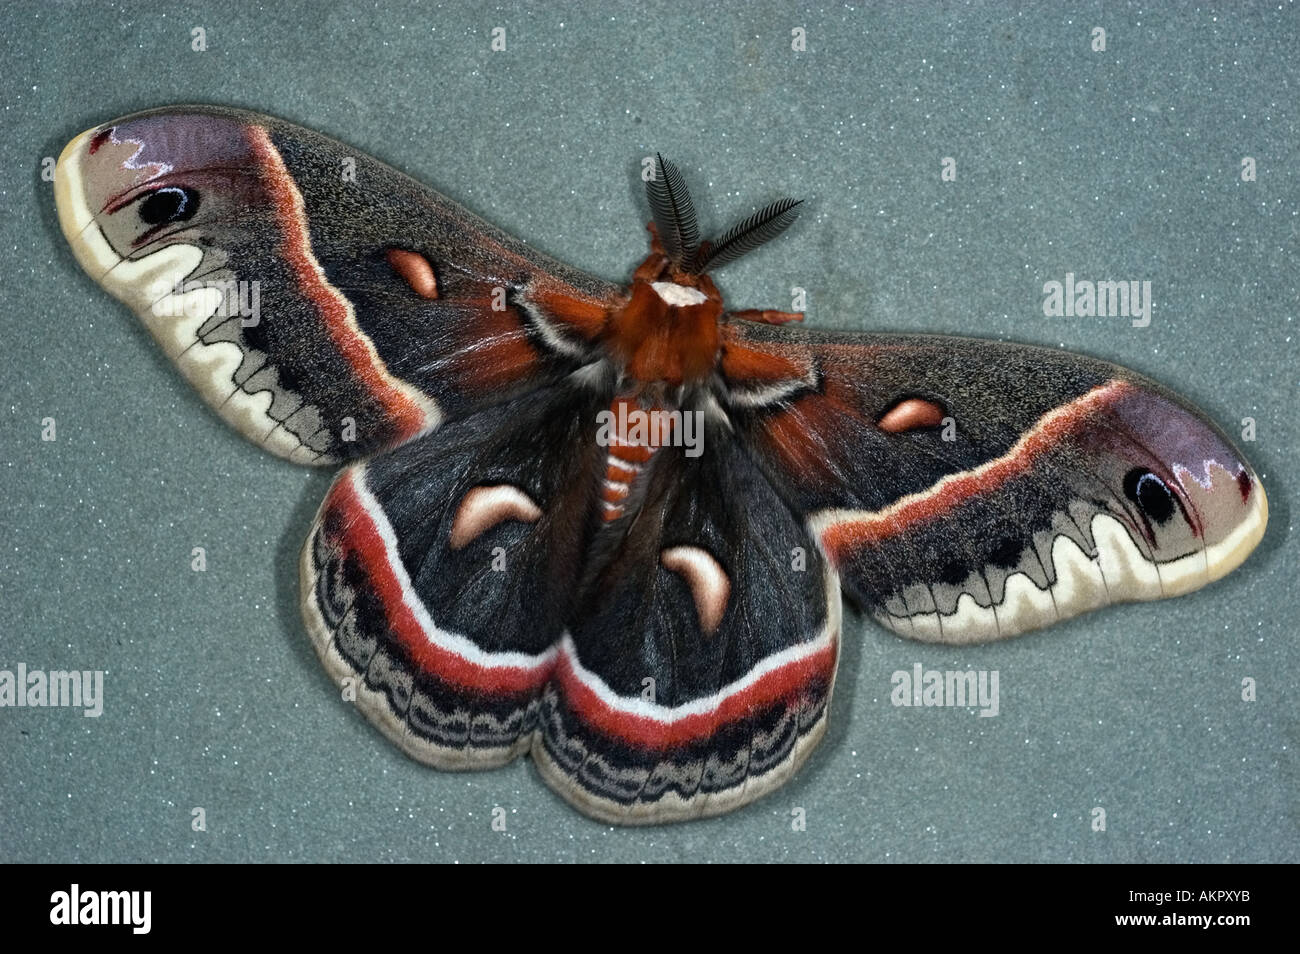 Cecropia moth Hyalophora cecropia Giant Silkworm family Saturnidae Male moth with large feathery antenna Stock Photo